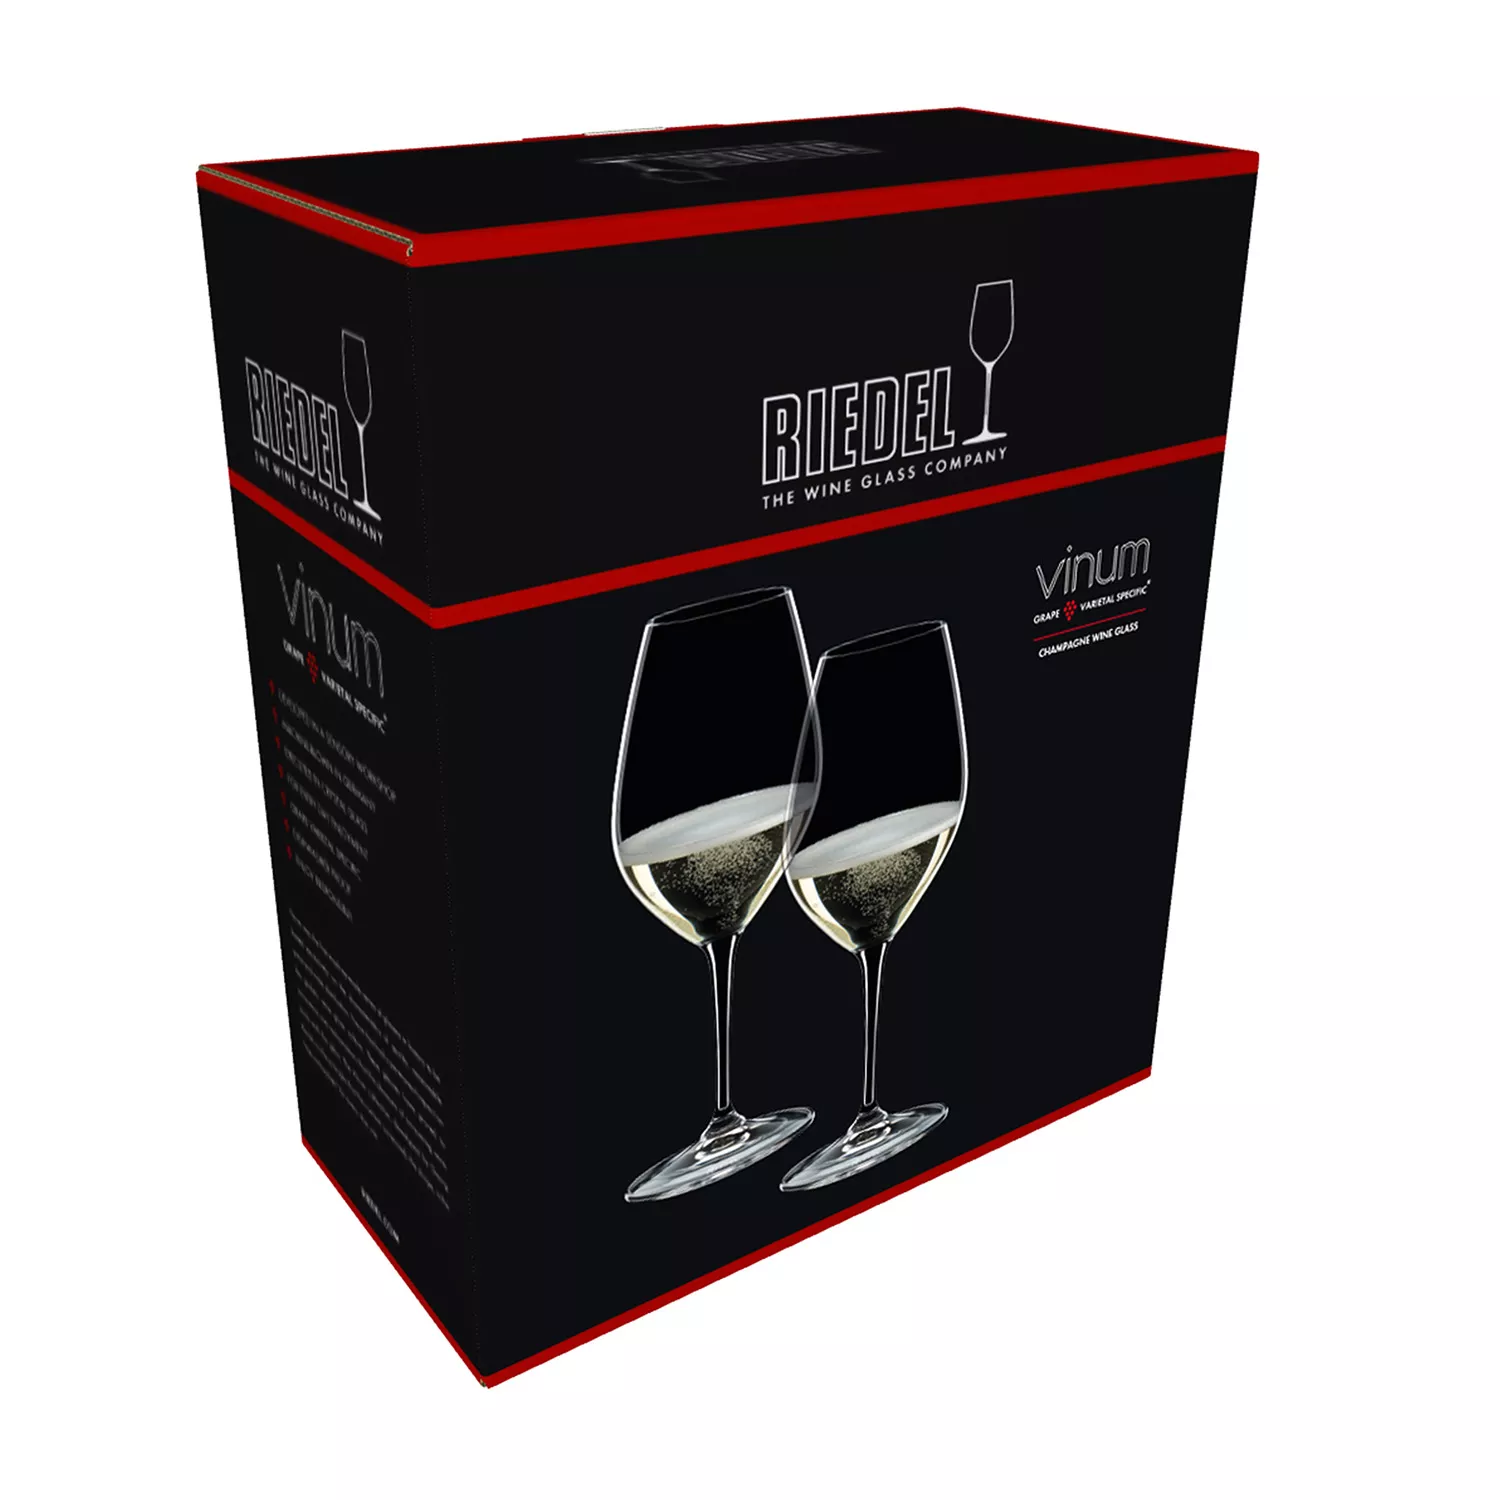 RIEDEL Vinum Champagne Wine Glass, Set of 2